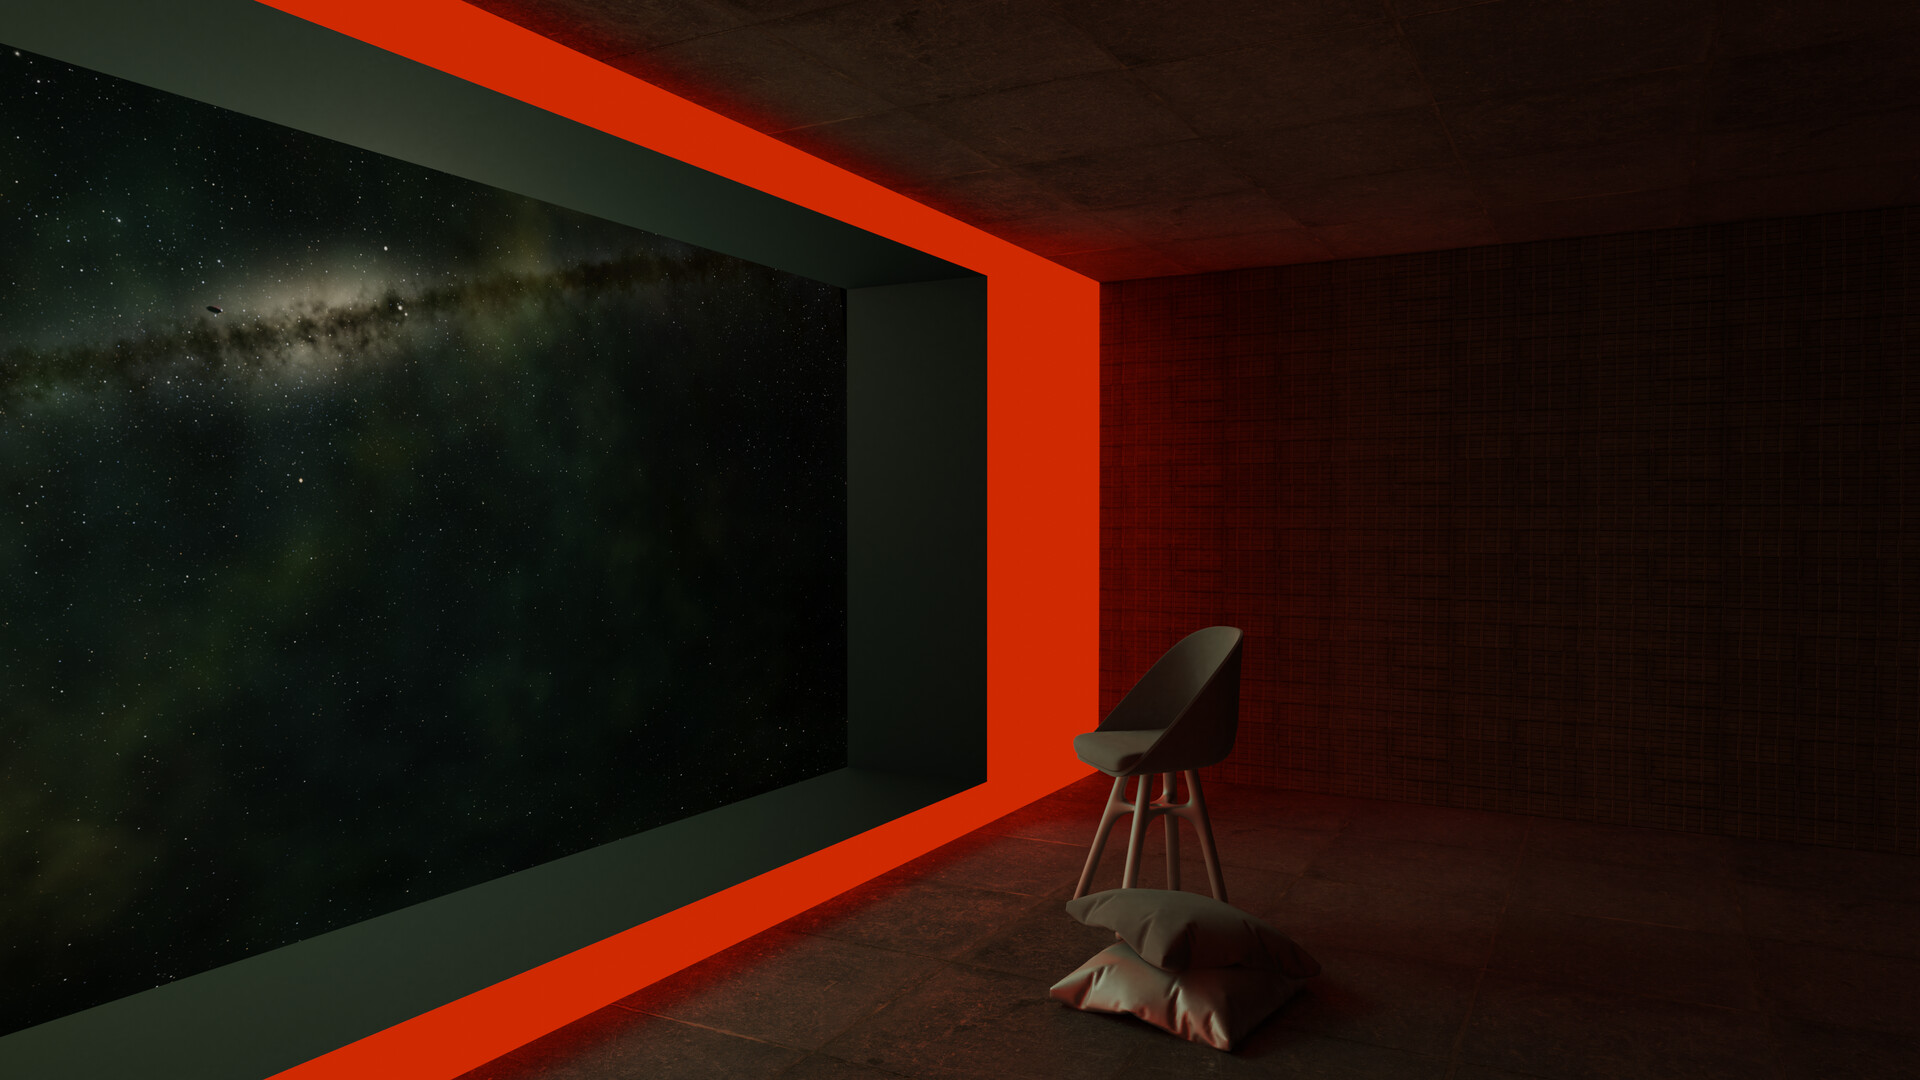 Sci Fi Minimal Space Art Wallpapers